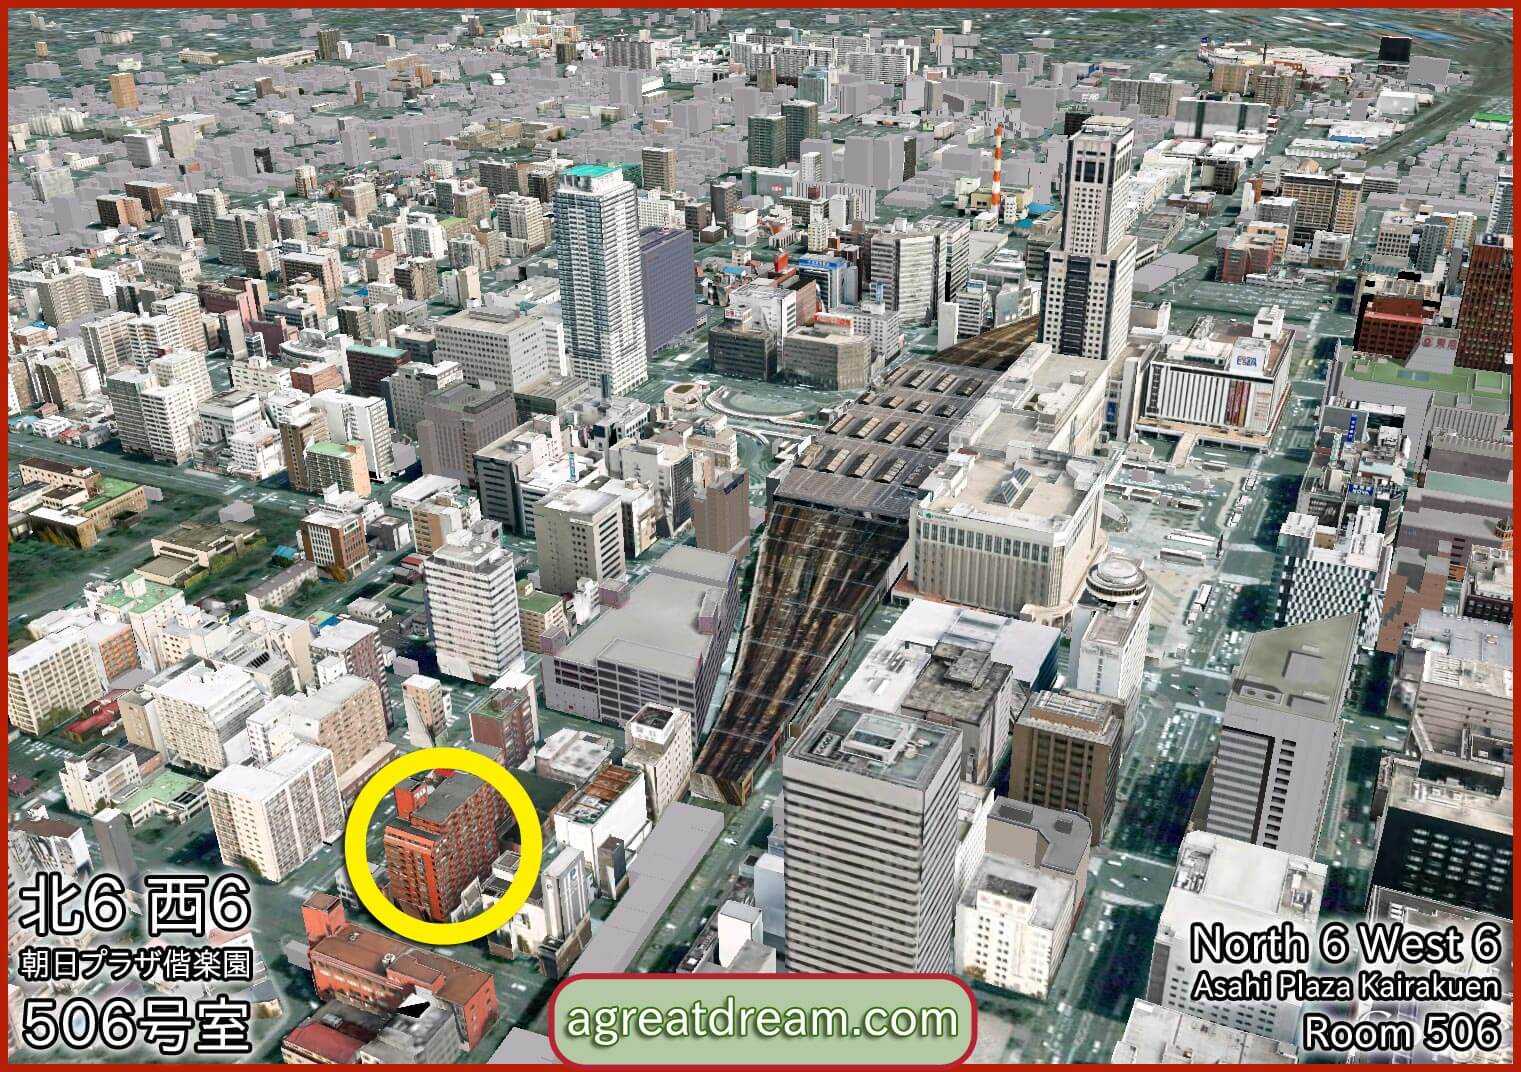 3D Altas | Access Map | Sapporo Eikaiwa agreatdream.com (Sapporo, North 6 West 6, Asahi Plaza Kairakuen, Room 506)